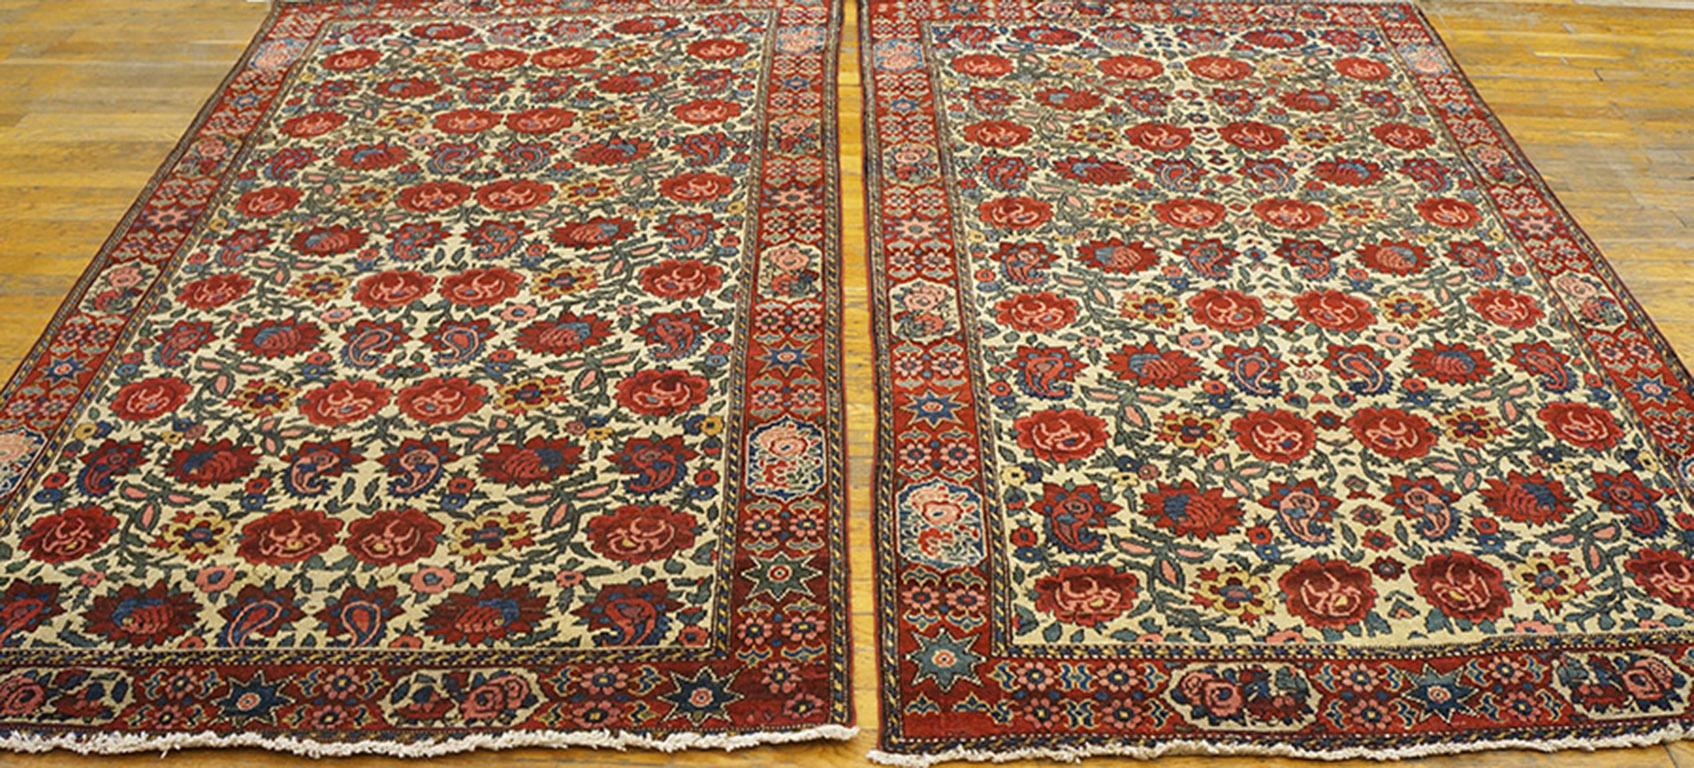 Antique Persian Bakhtiari rug, measures: 4'5